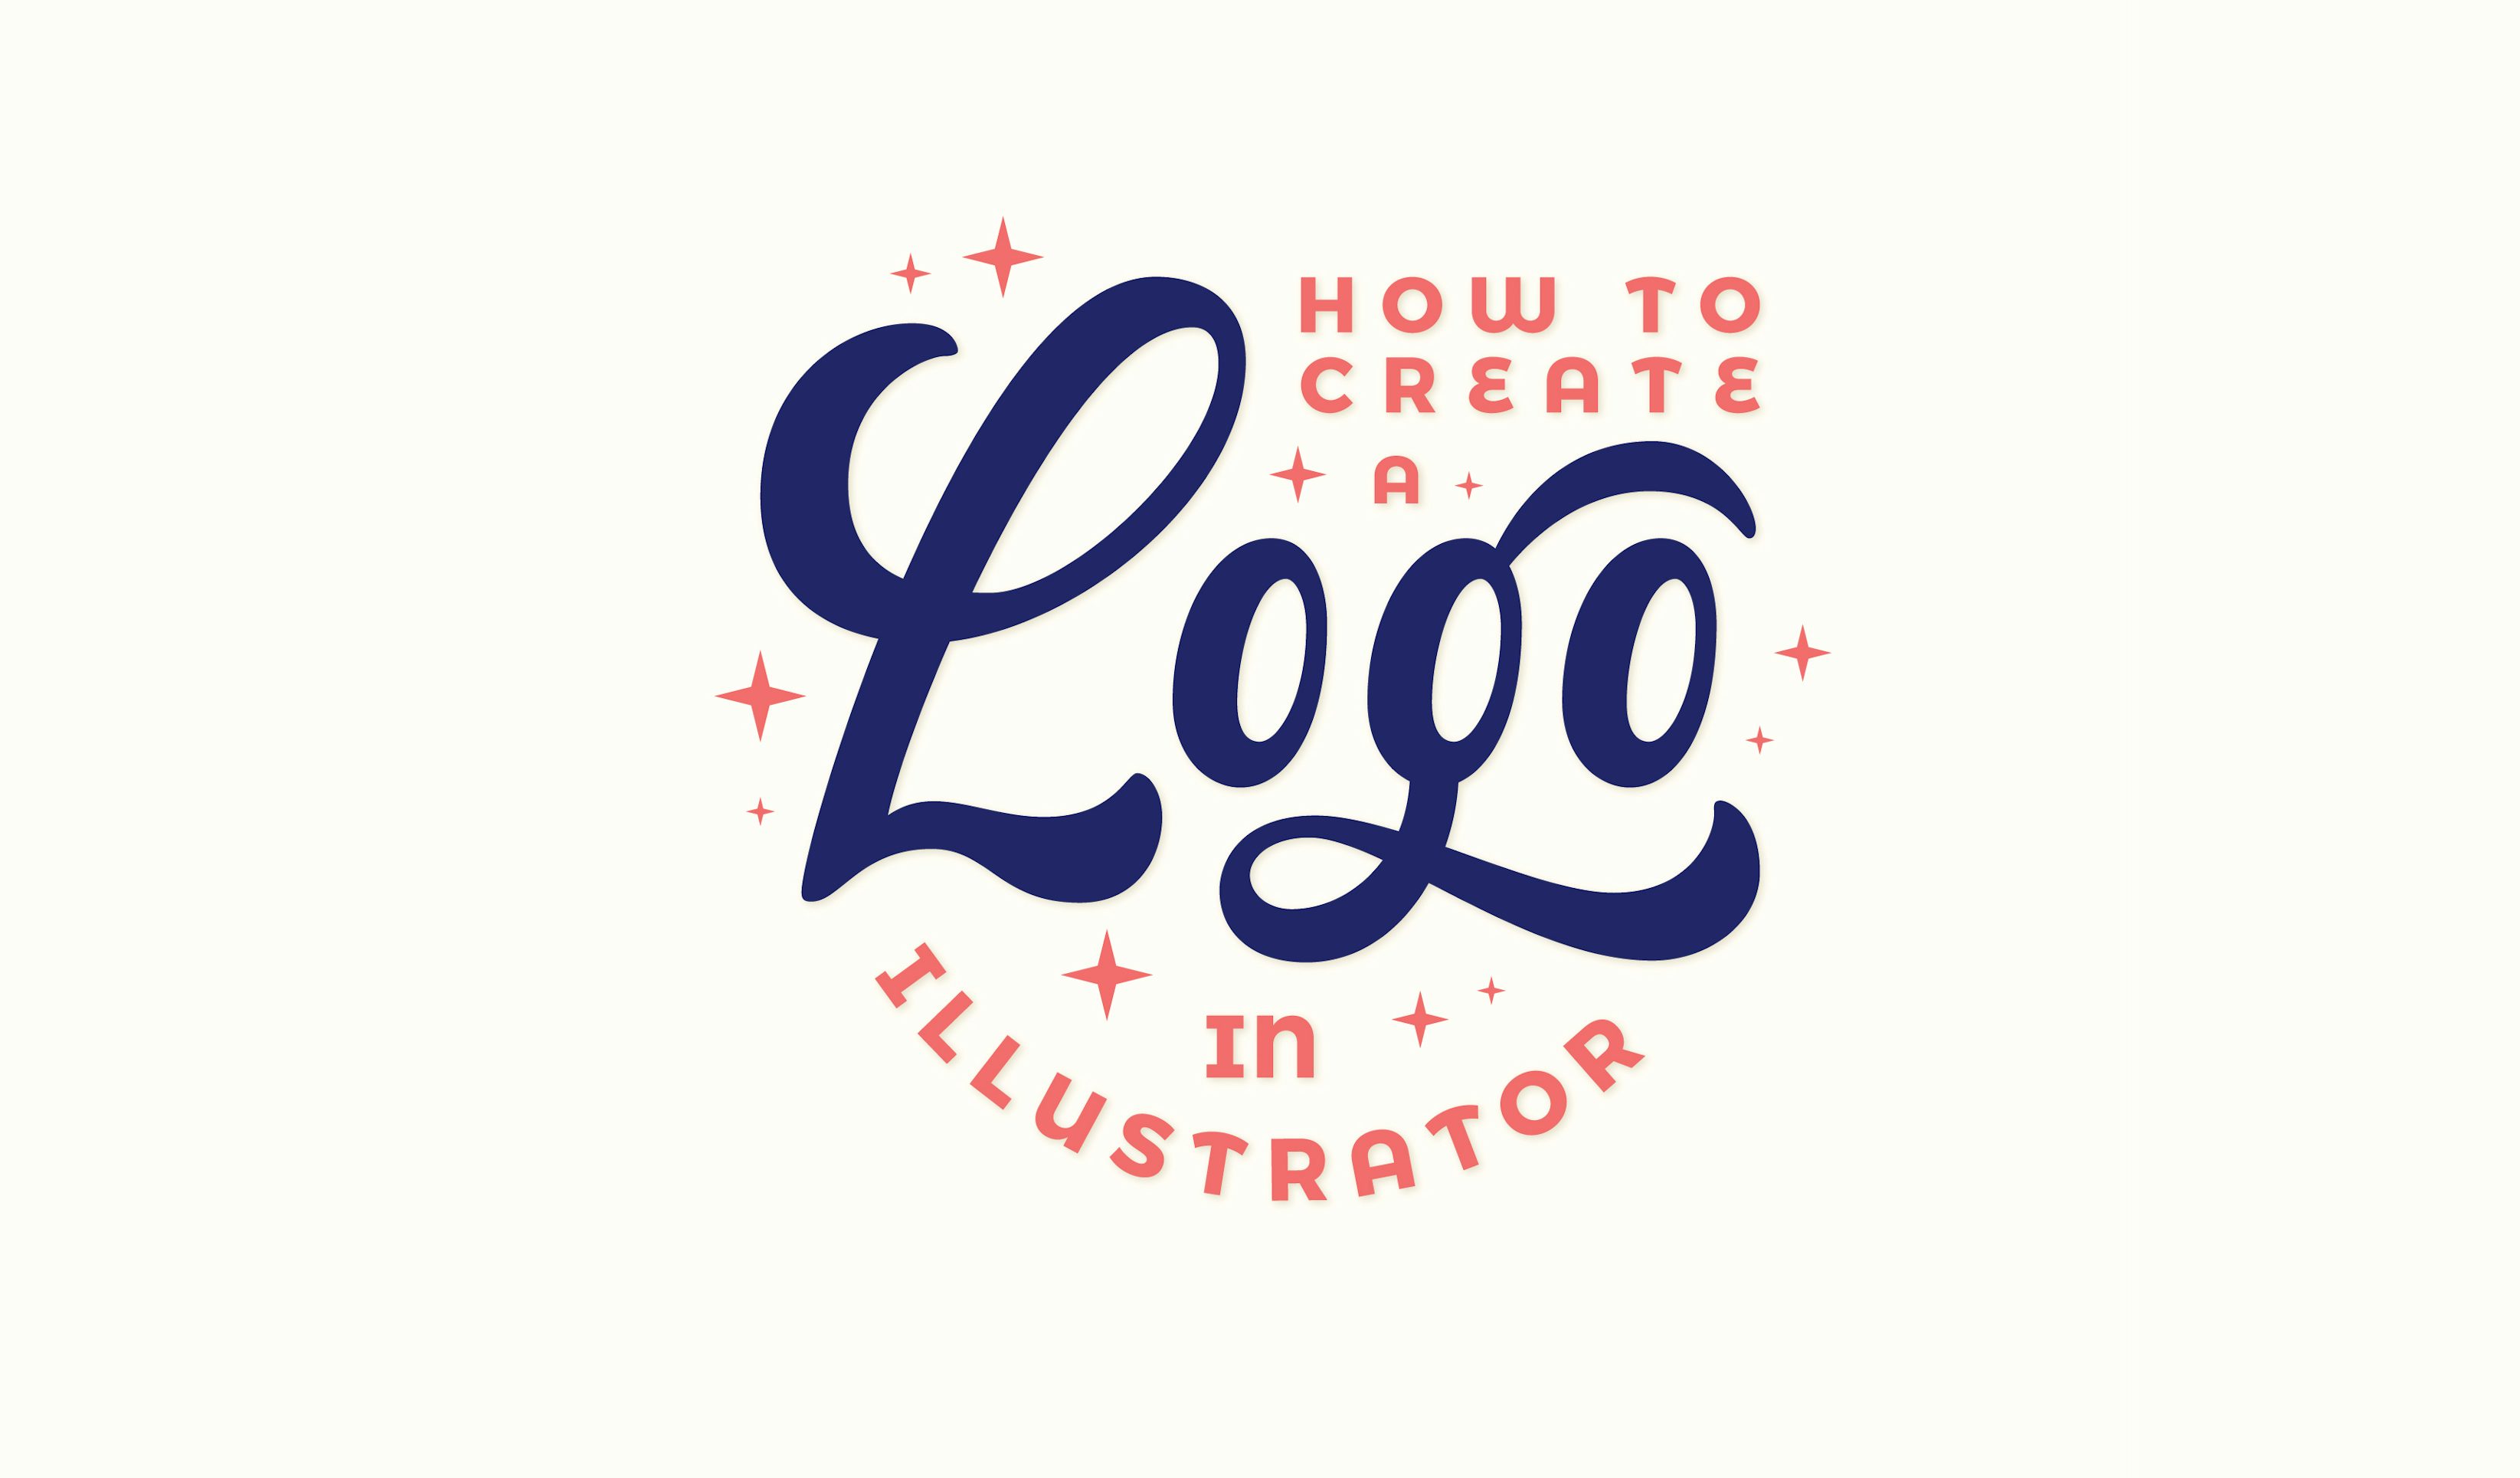 typography art tutorial illustrator